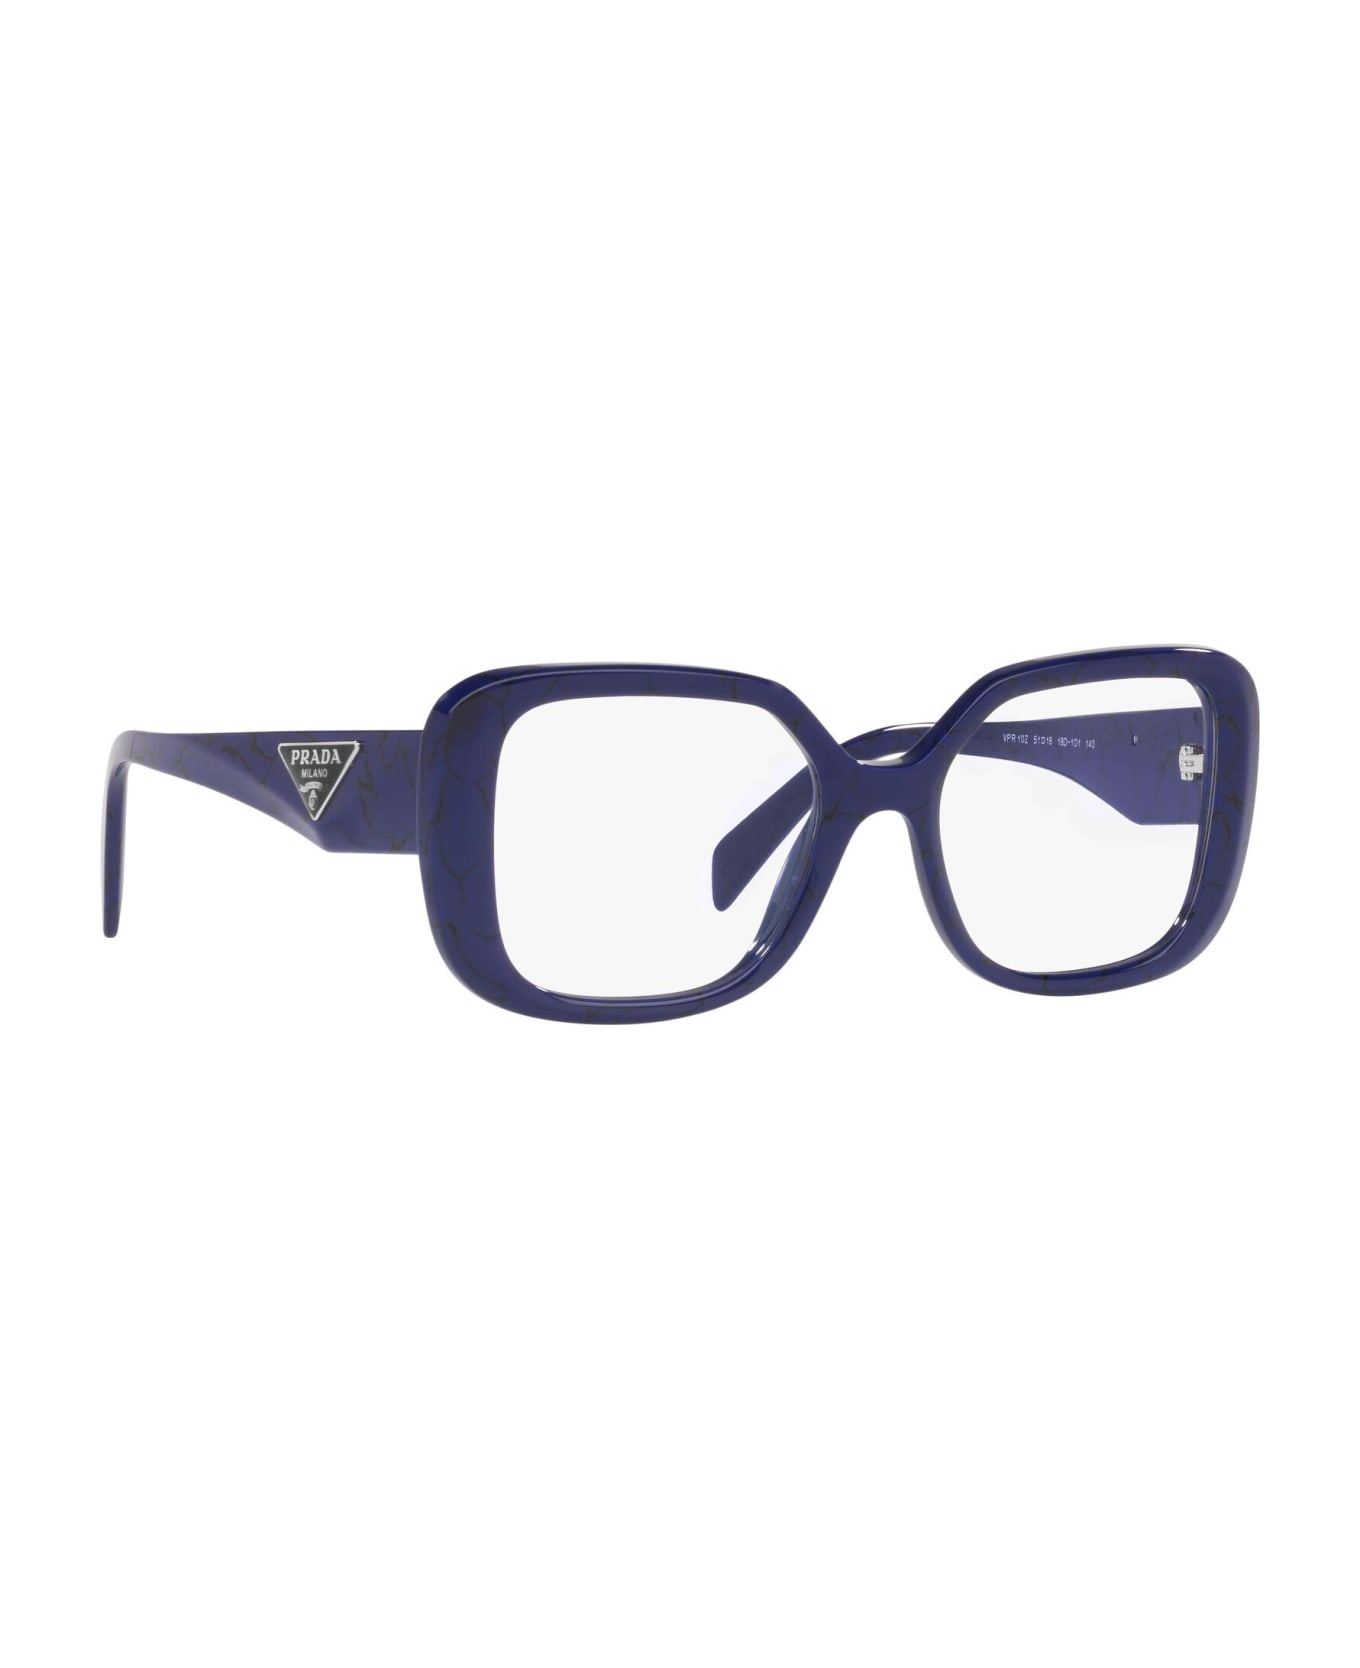 Prada Eyewear Glasses - 18D1O1